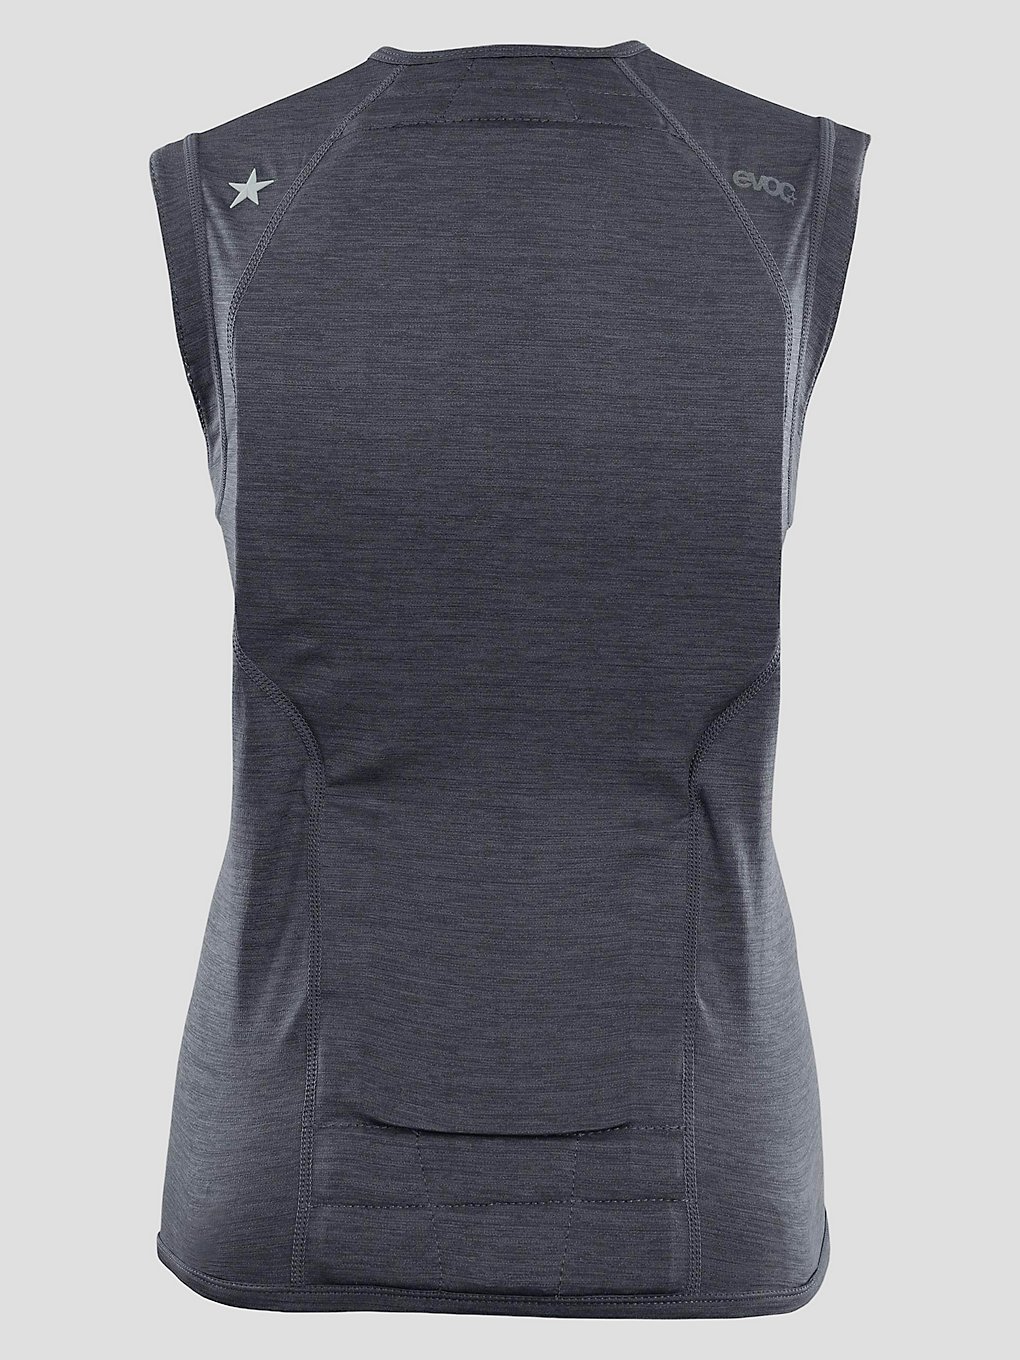 Evoc Protector Vest carbon grey kaufen